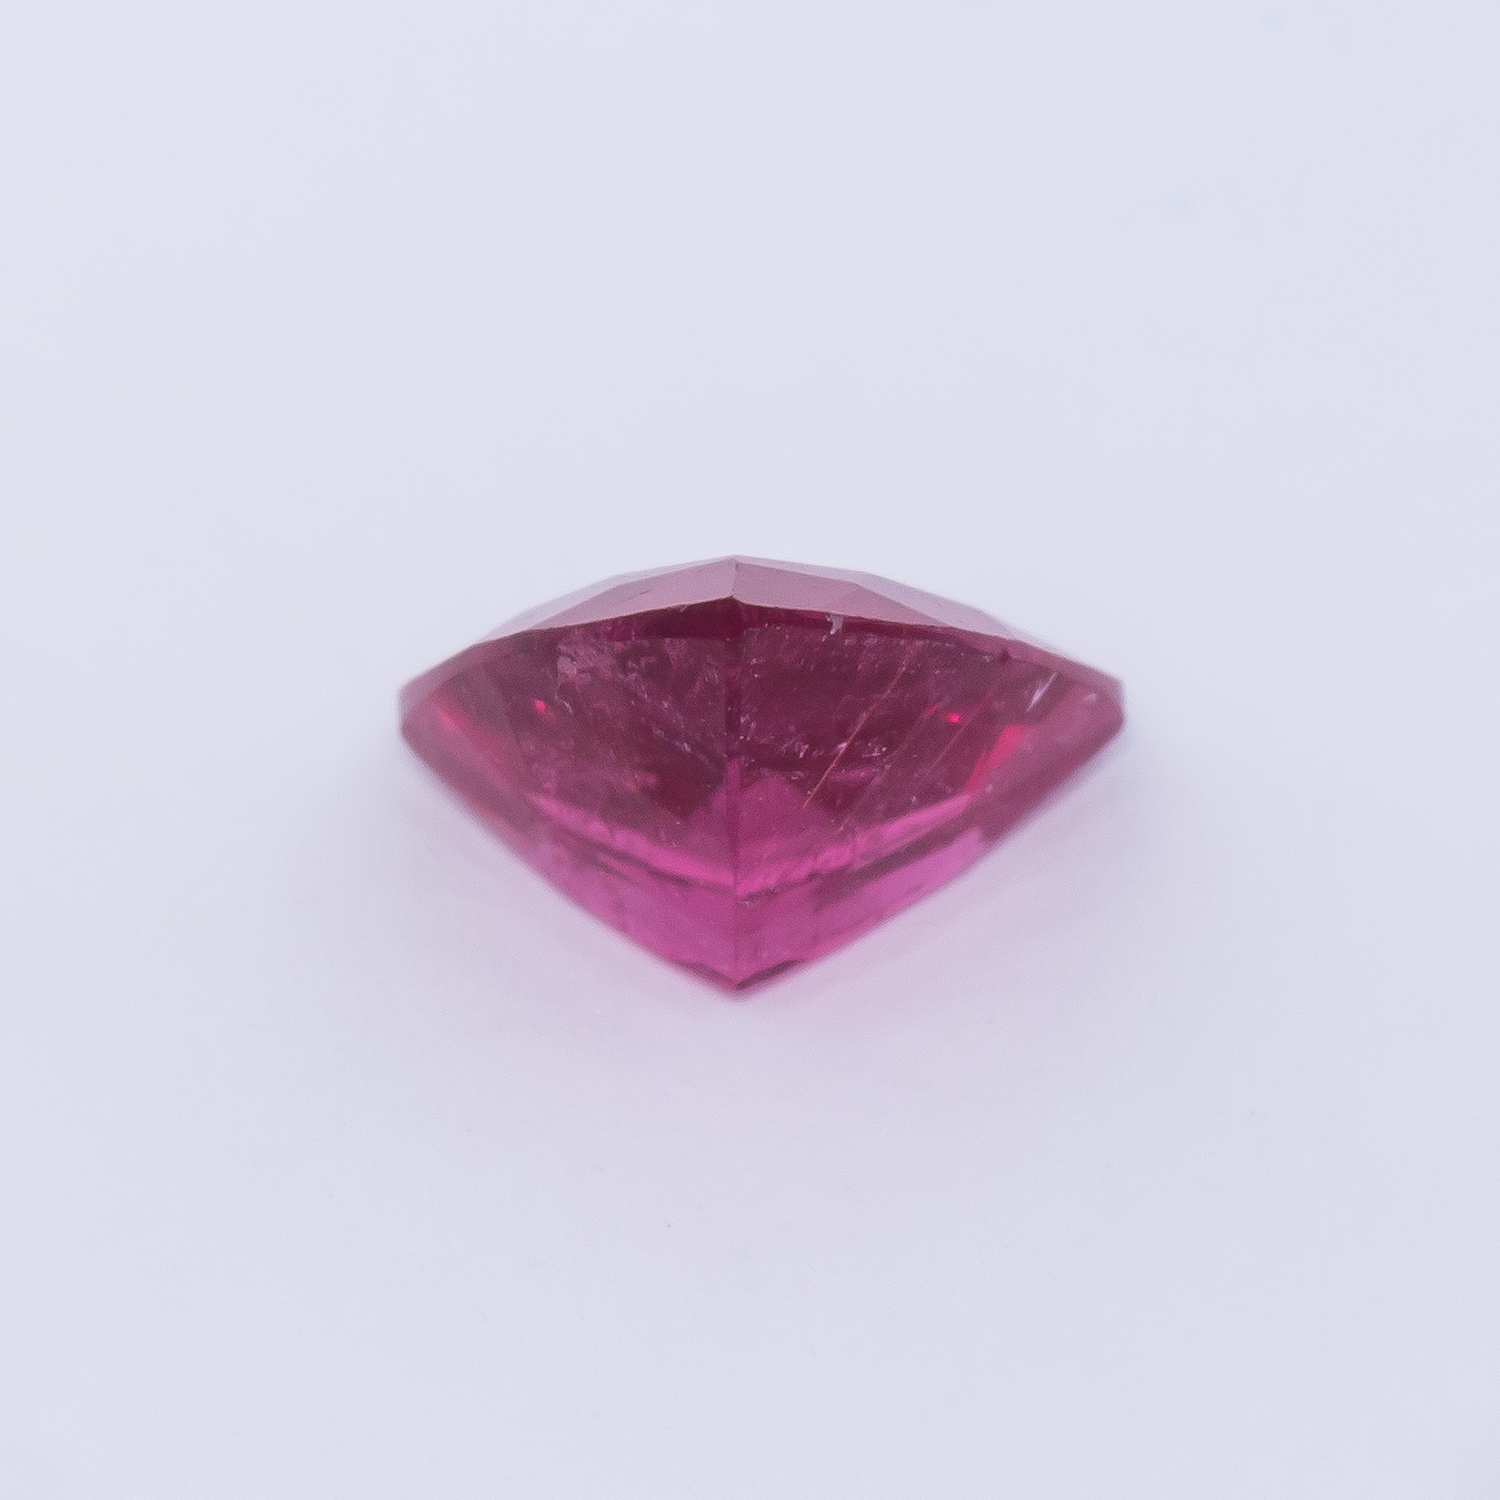 Rubellit - rosa, trillion, 7x7.3 mm, 0.99 cts, Nr. RUB15005